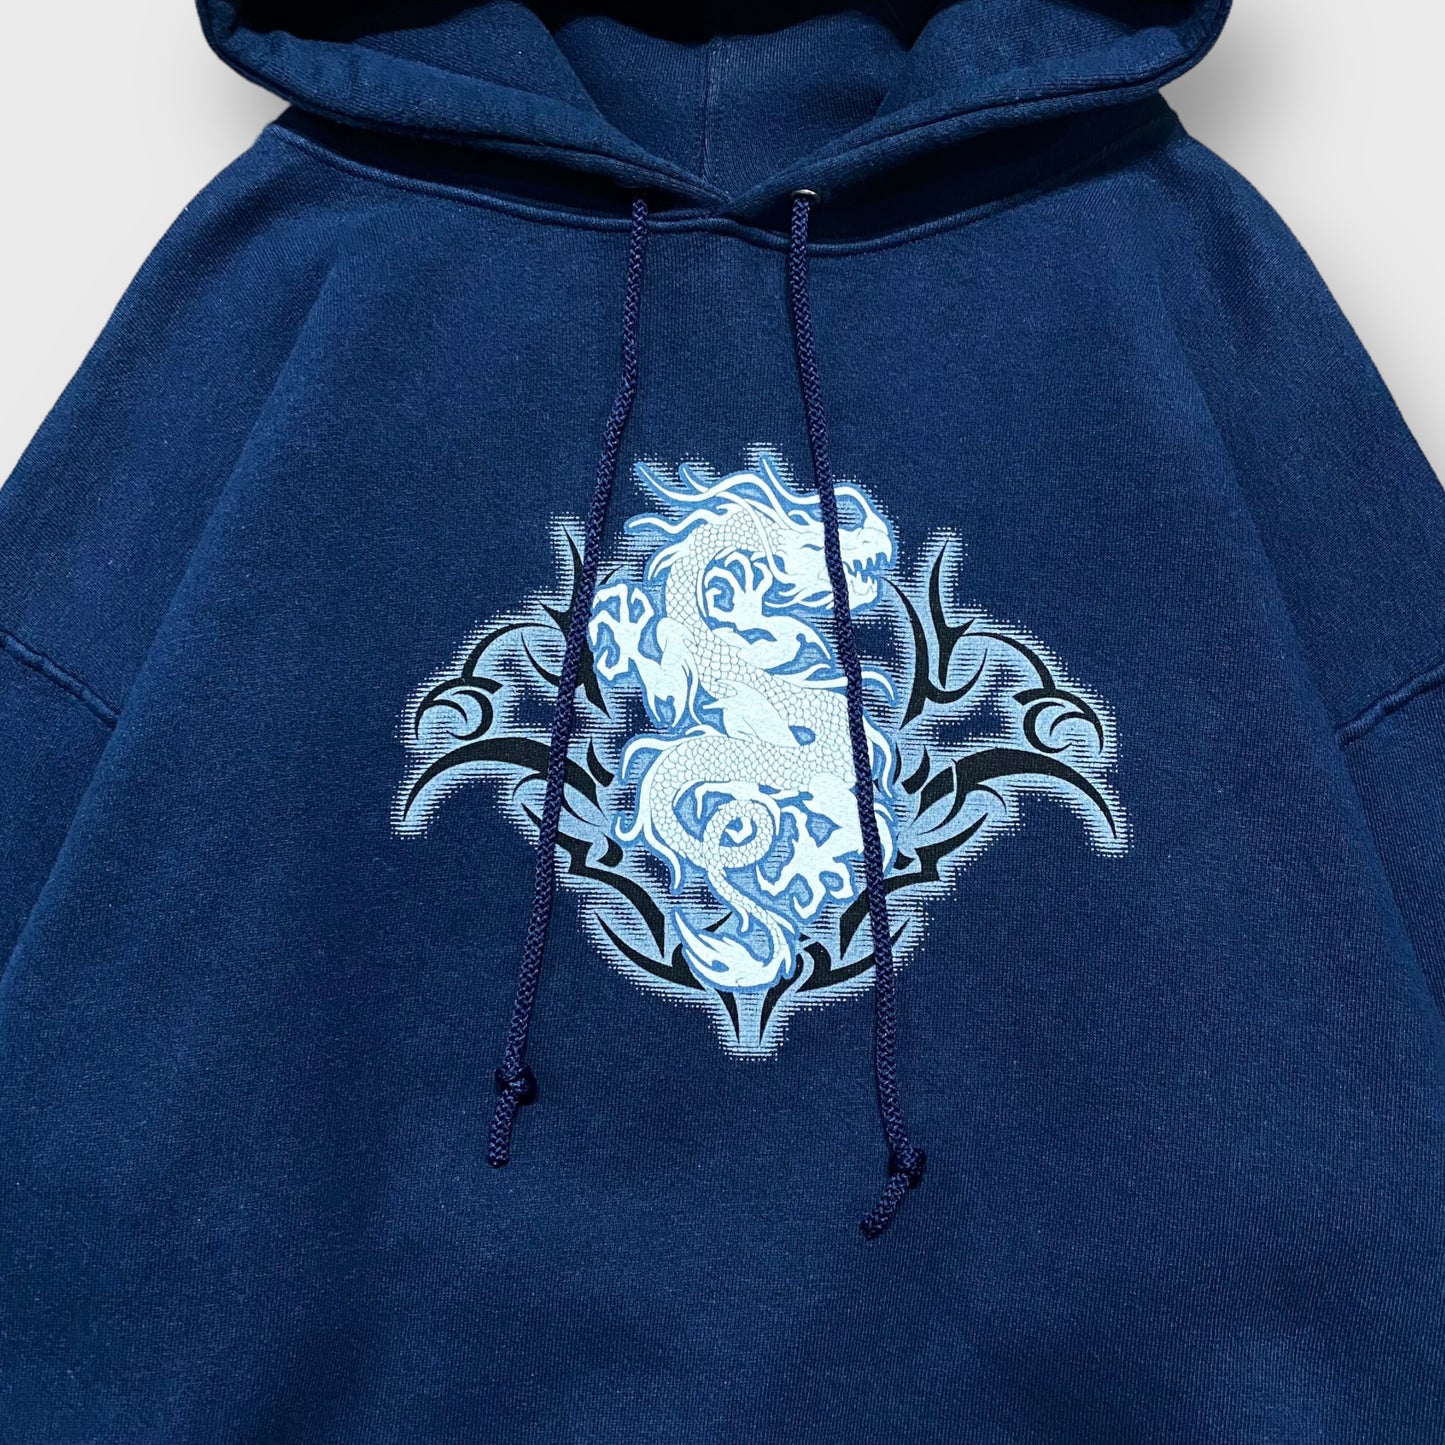 Tribal dragon design hoodie